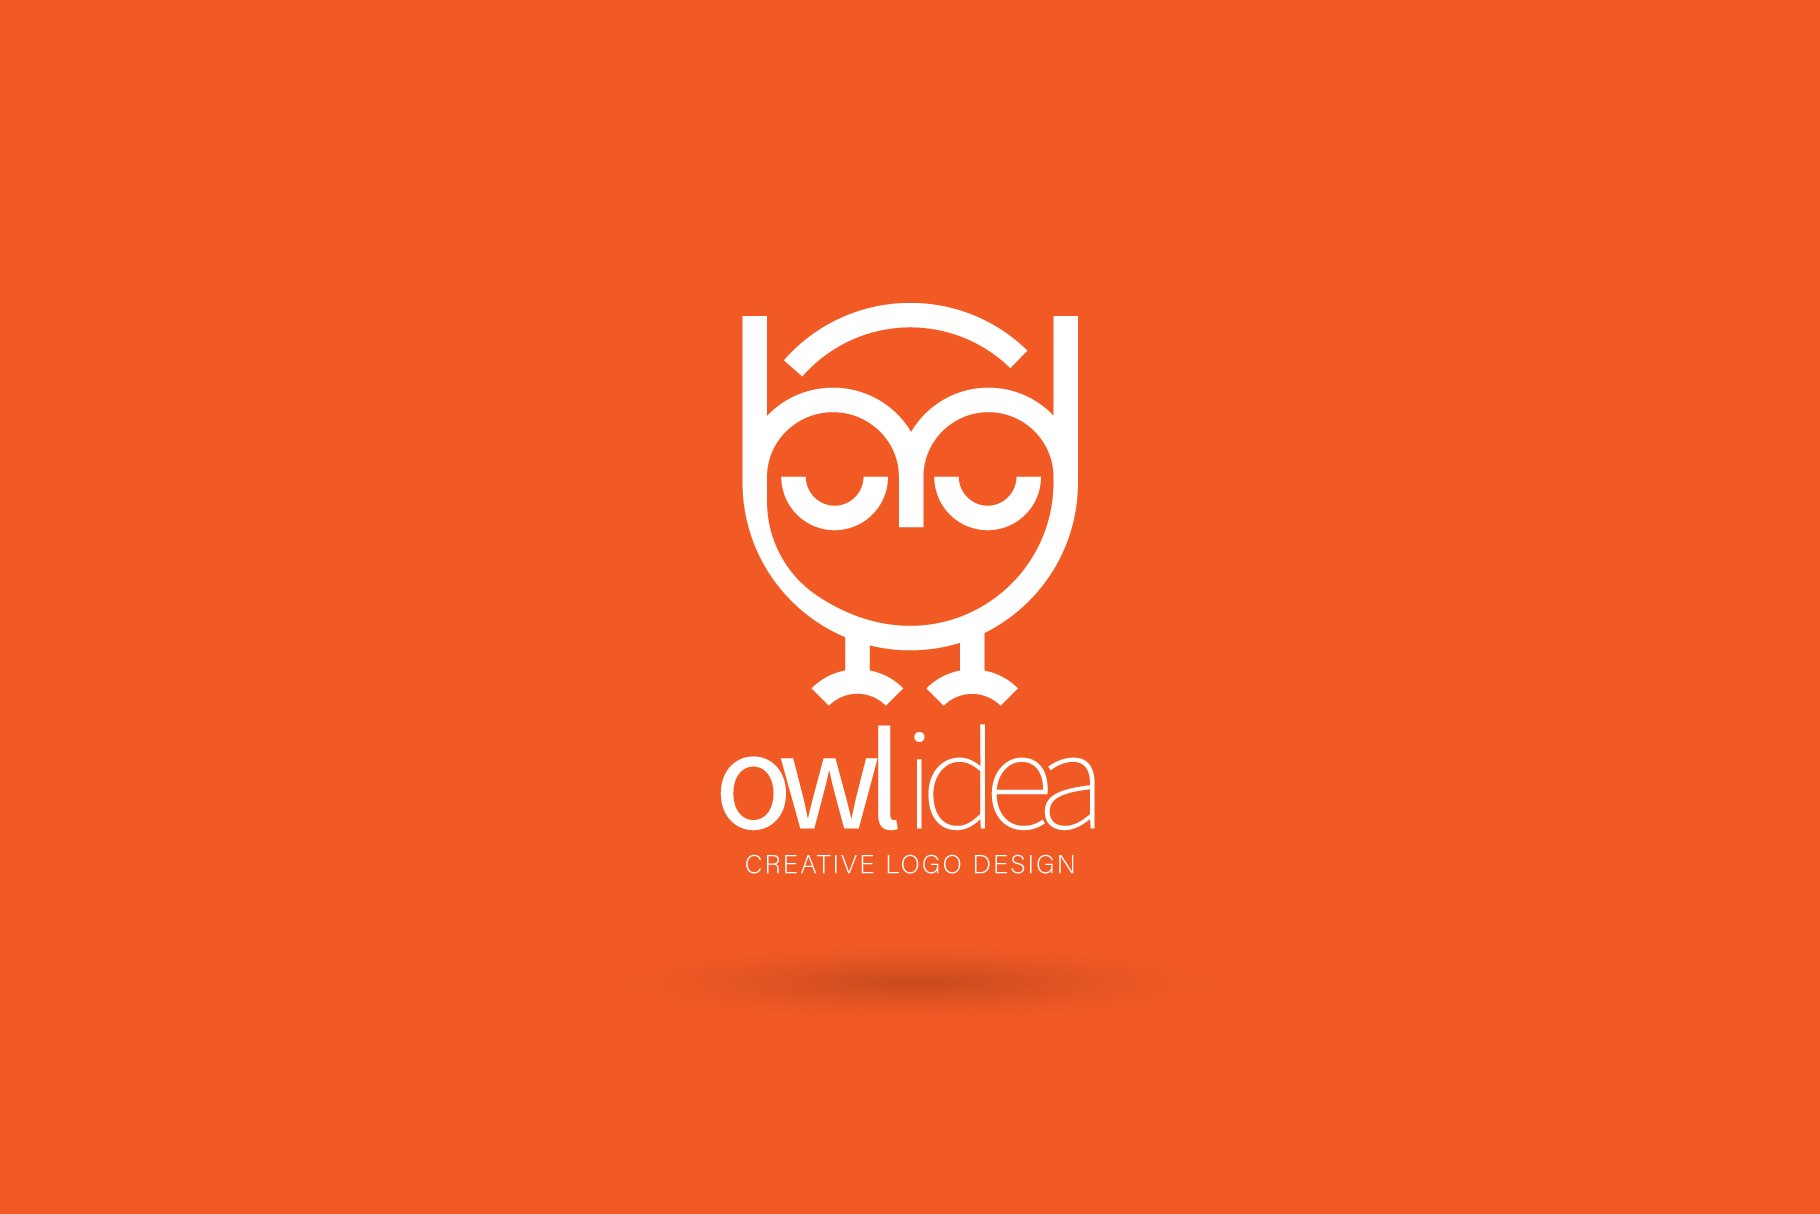 Owl logo preview image.